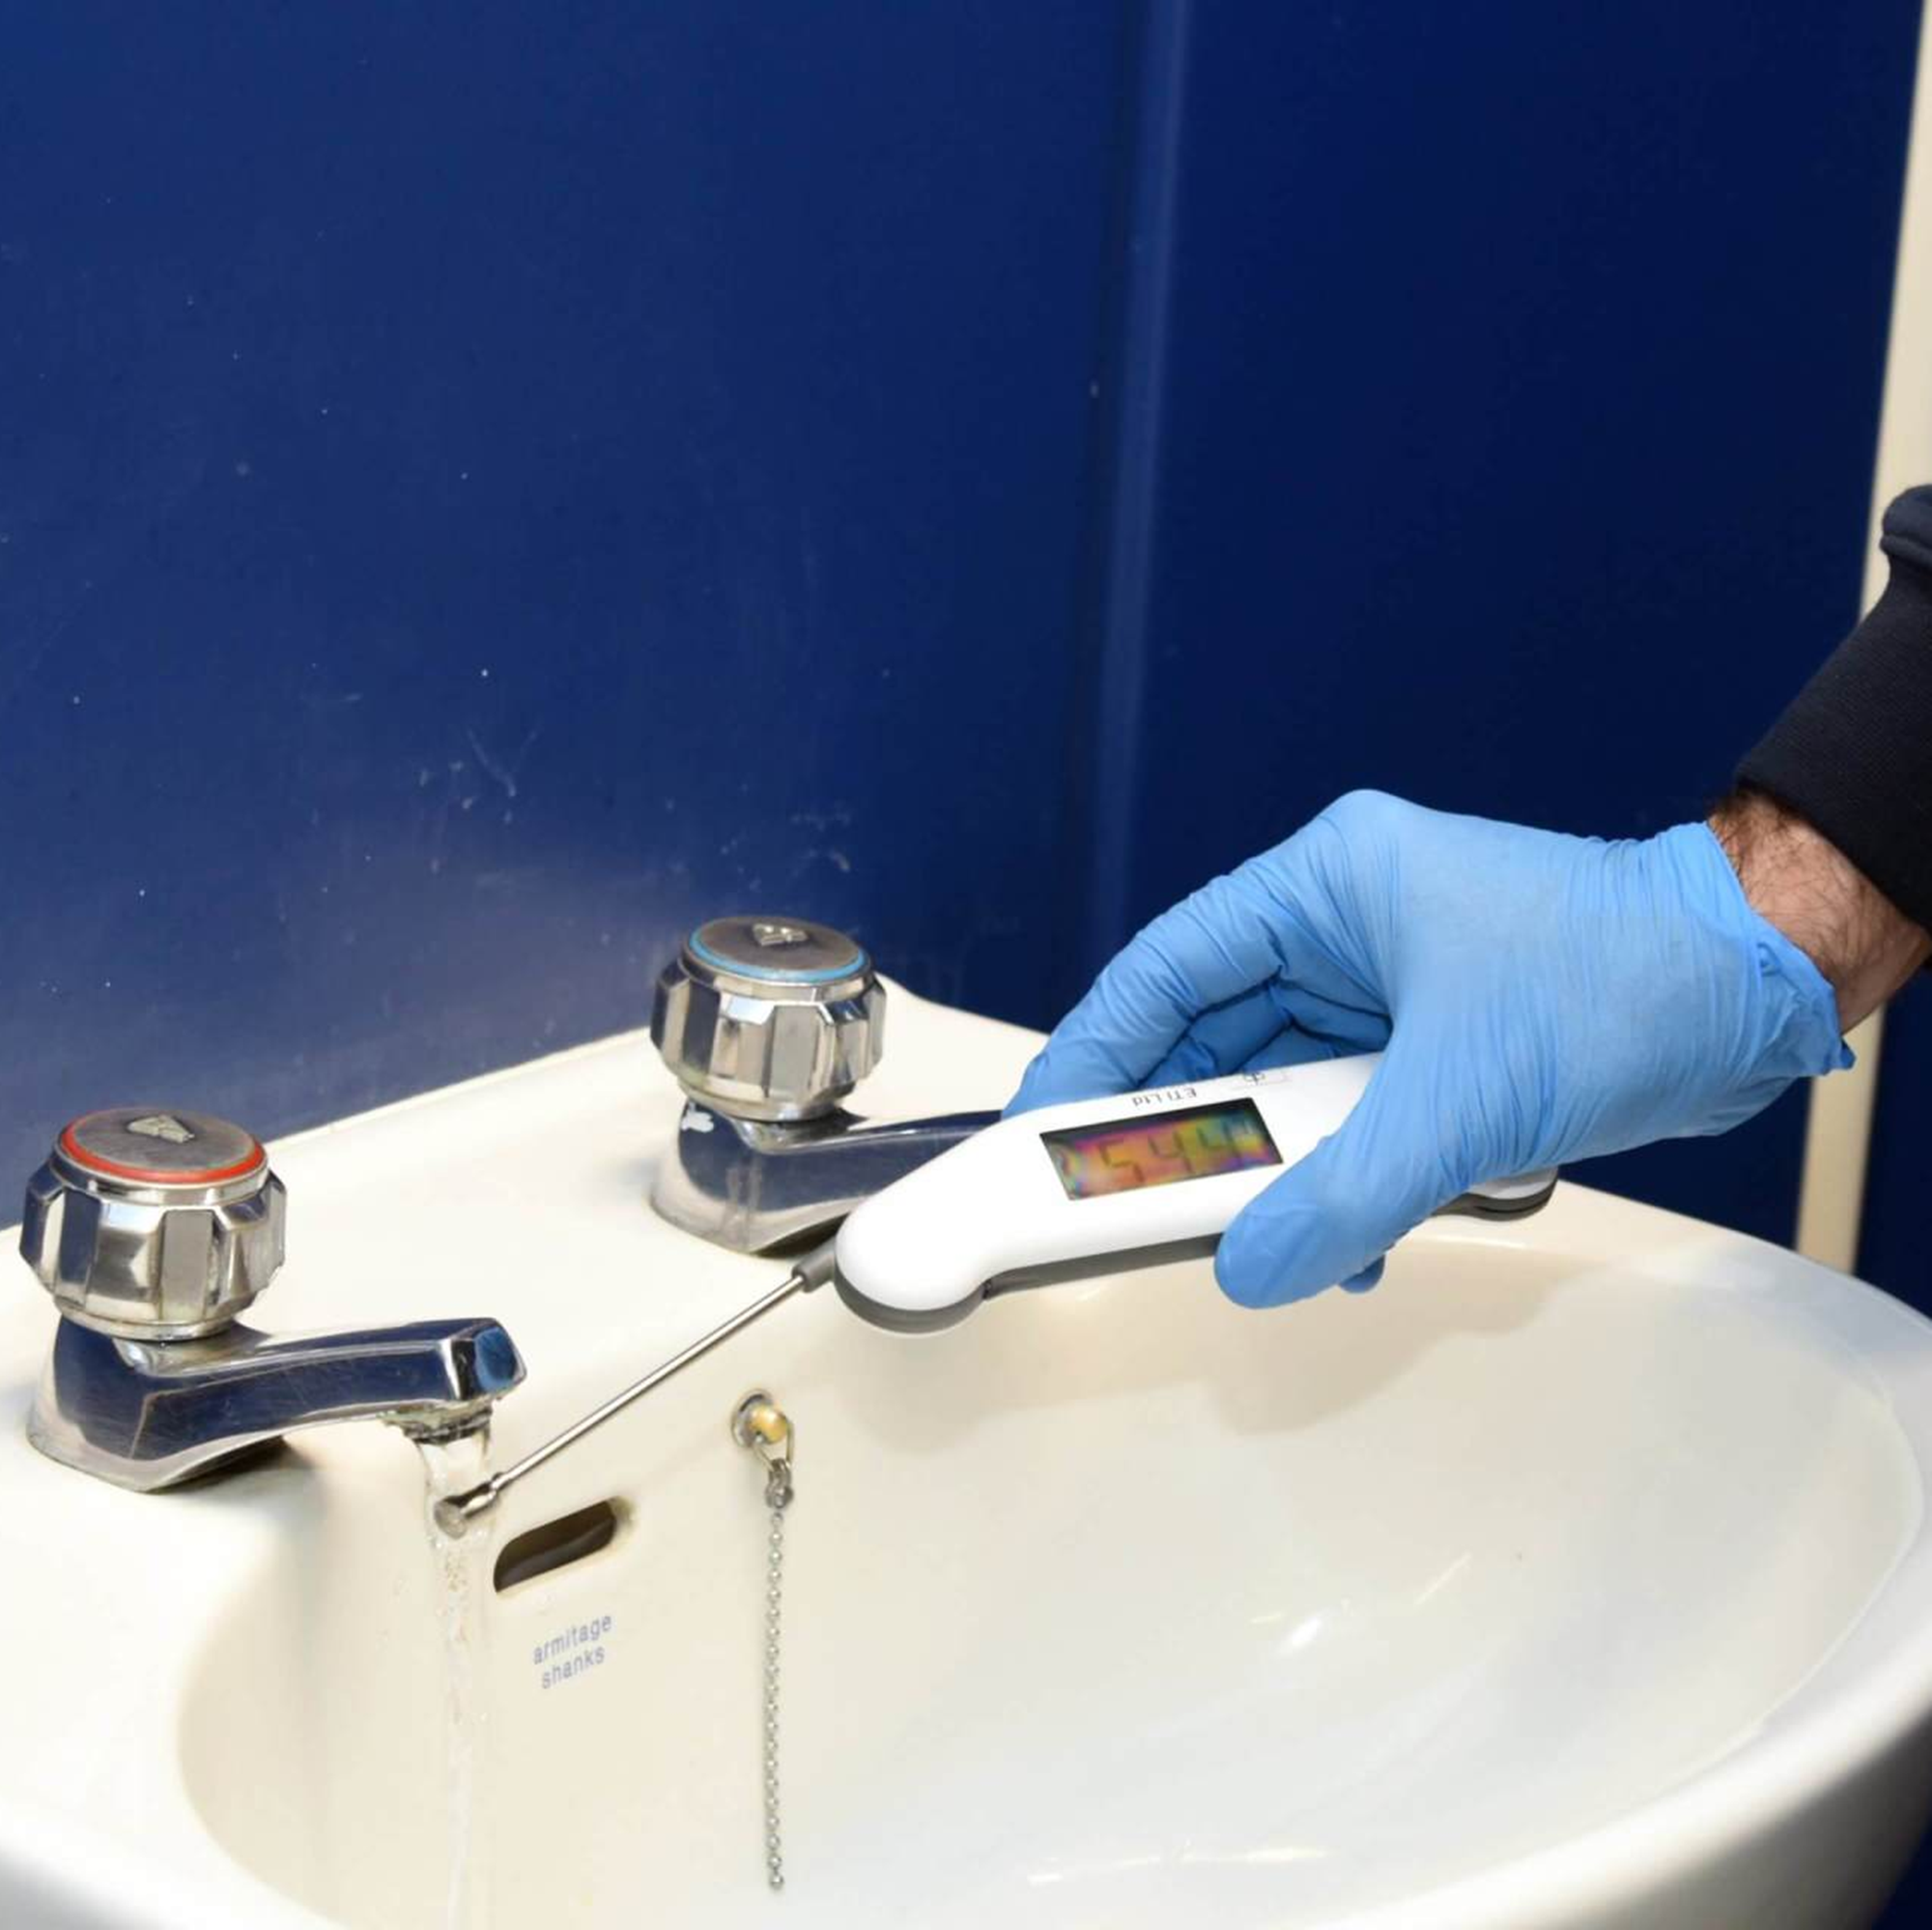 Legionella preventative maintenance  PPM, Flushing Little-used Outlets, temperature checks, tank inspection